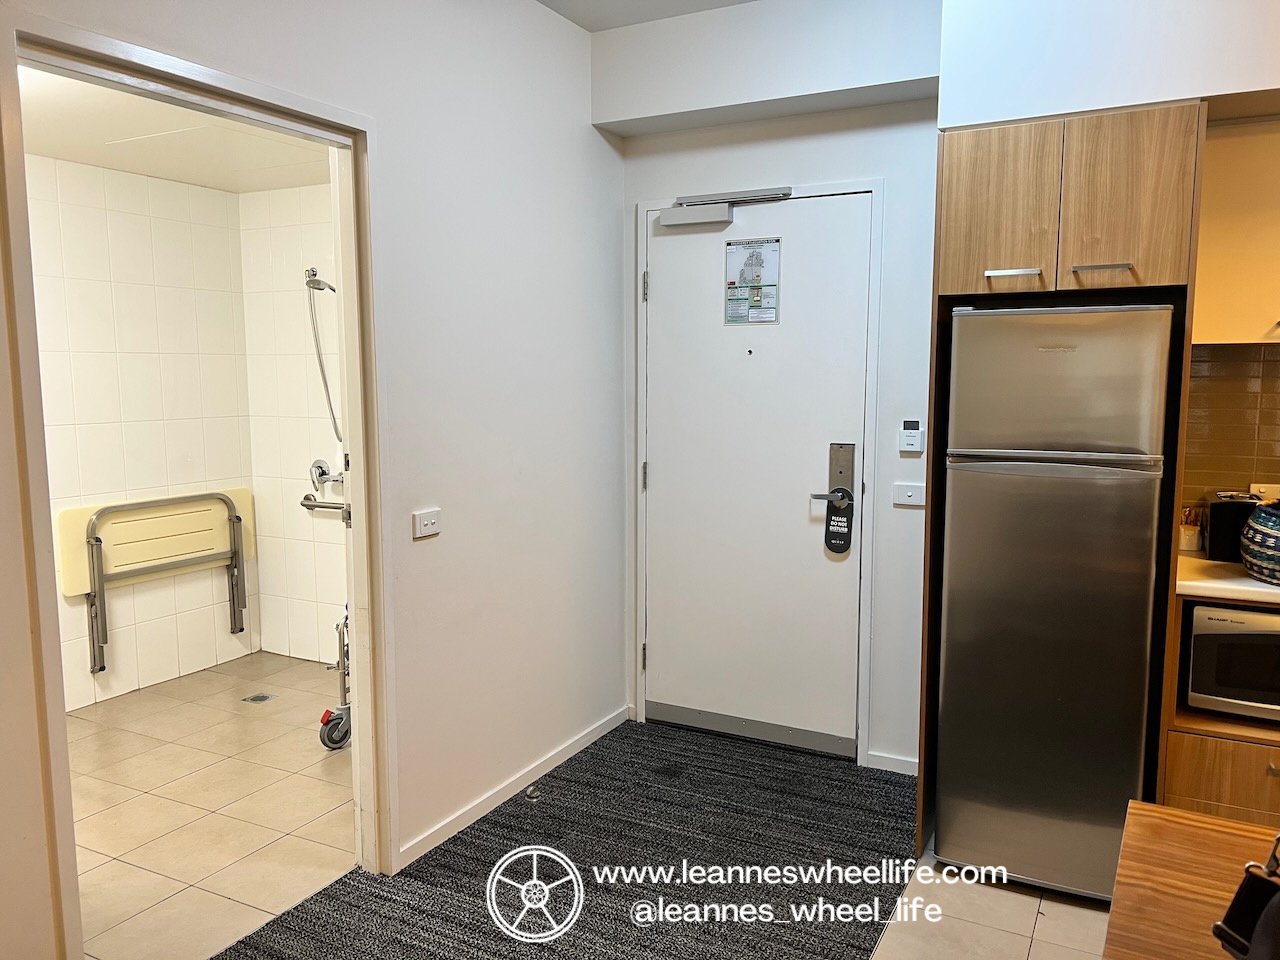 840mm wide entry door into kitchen area